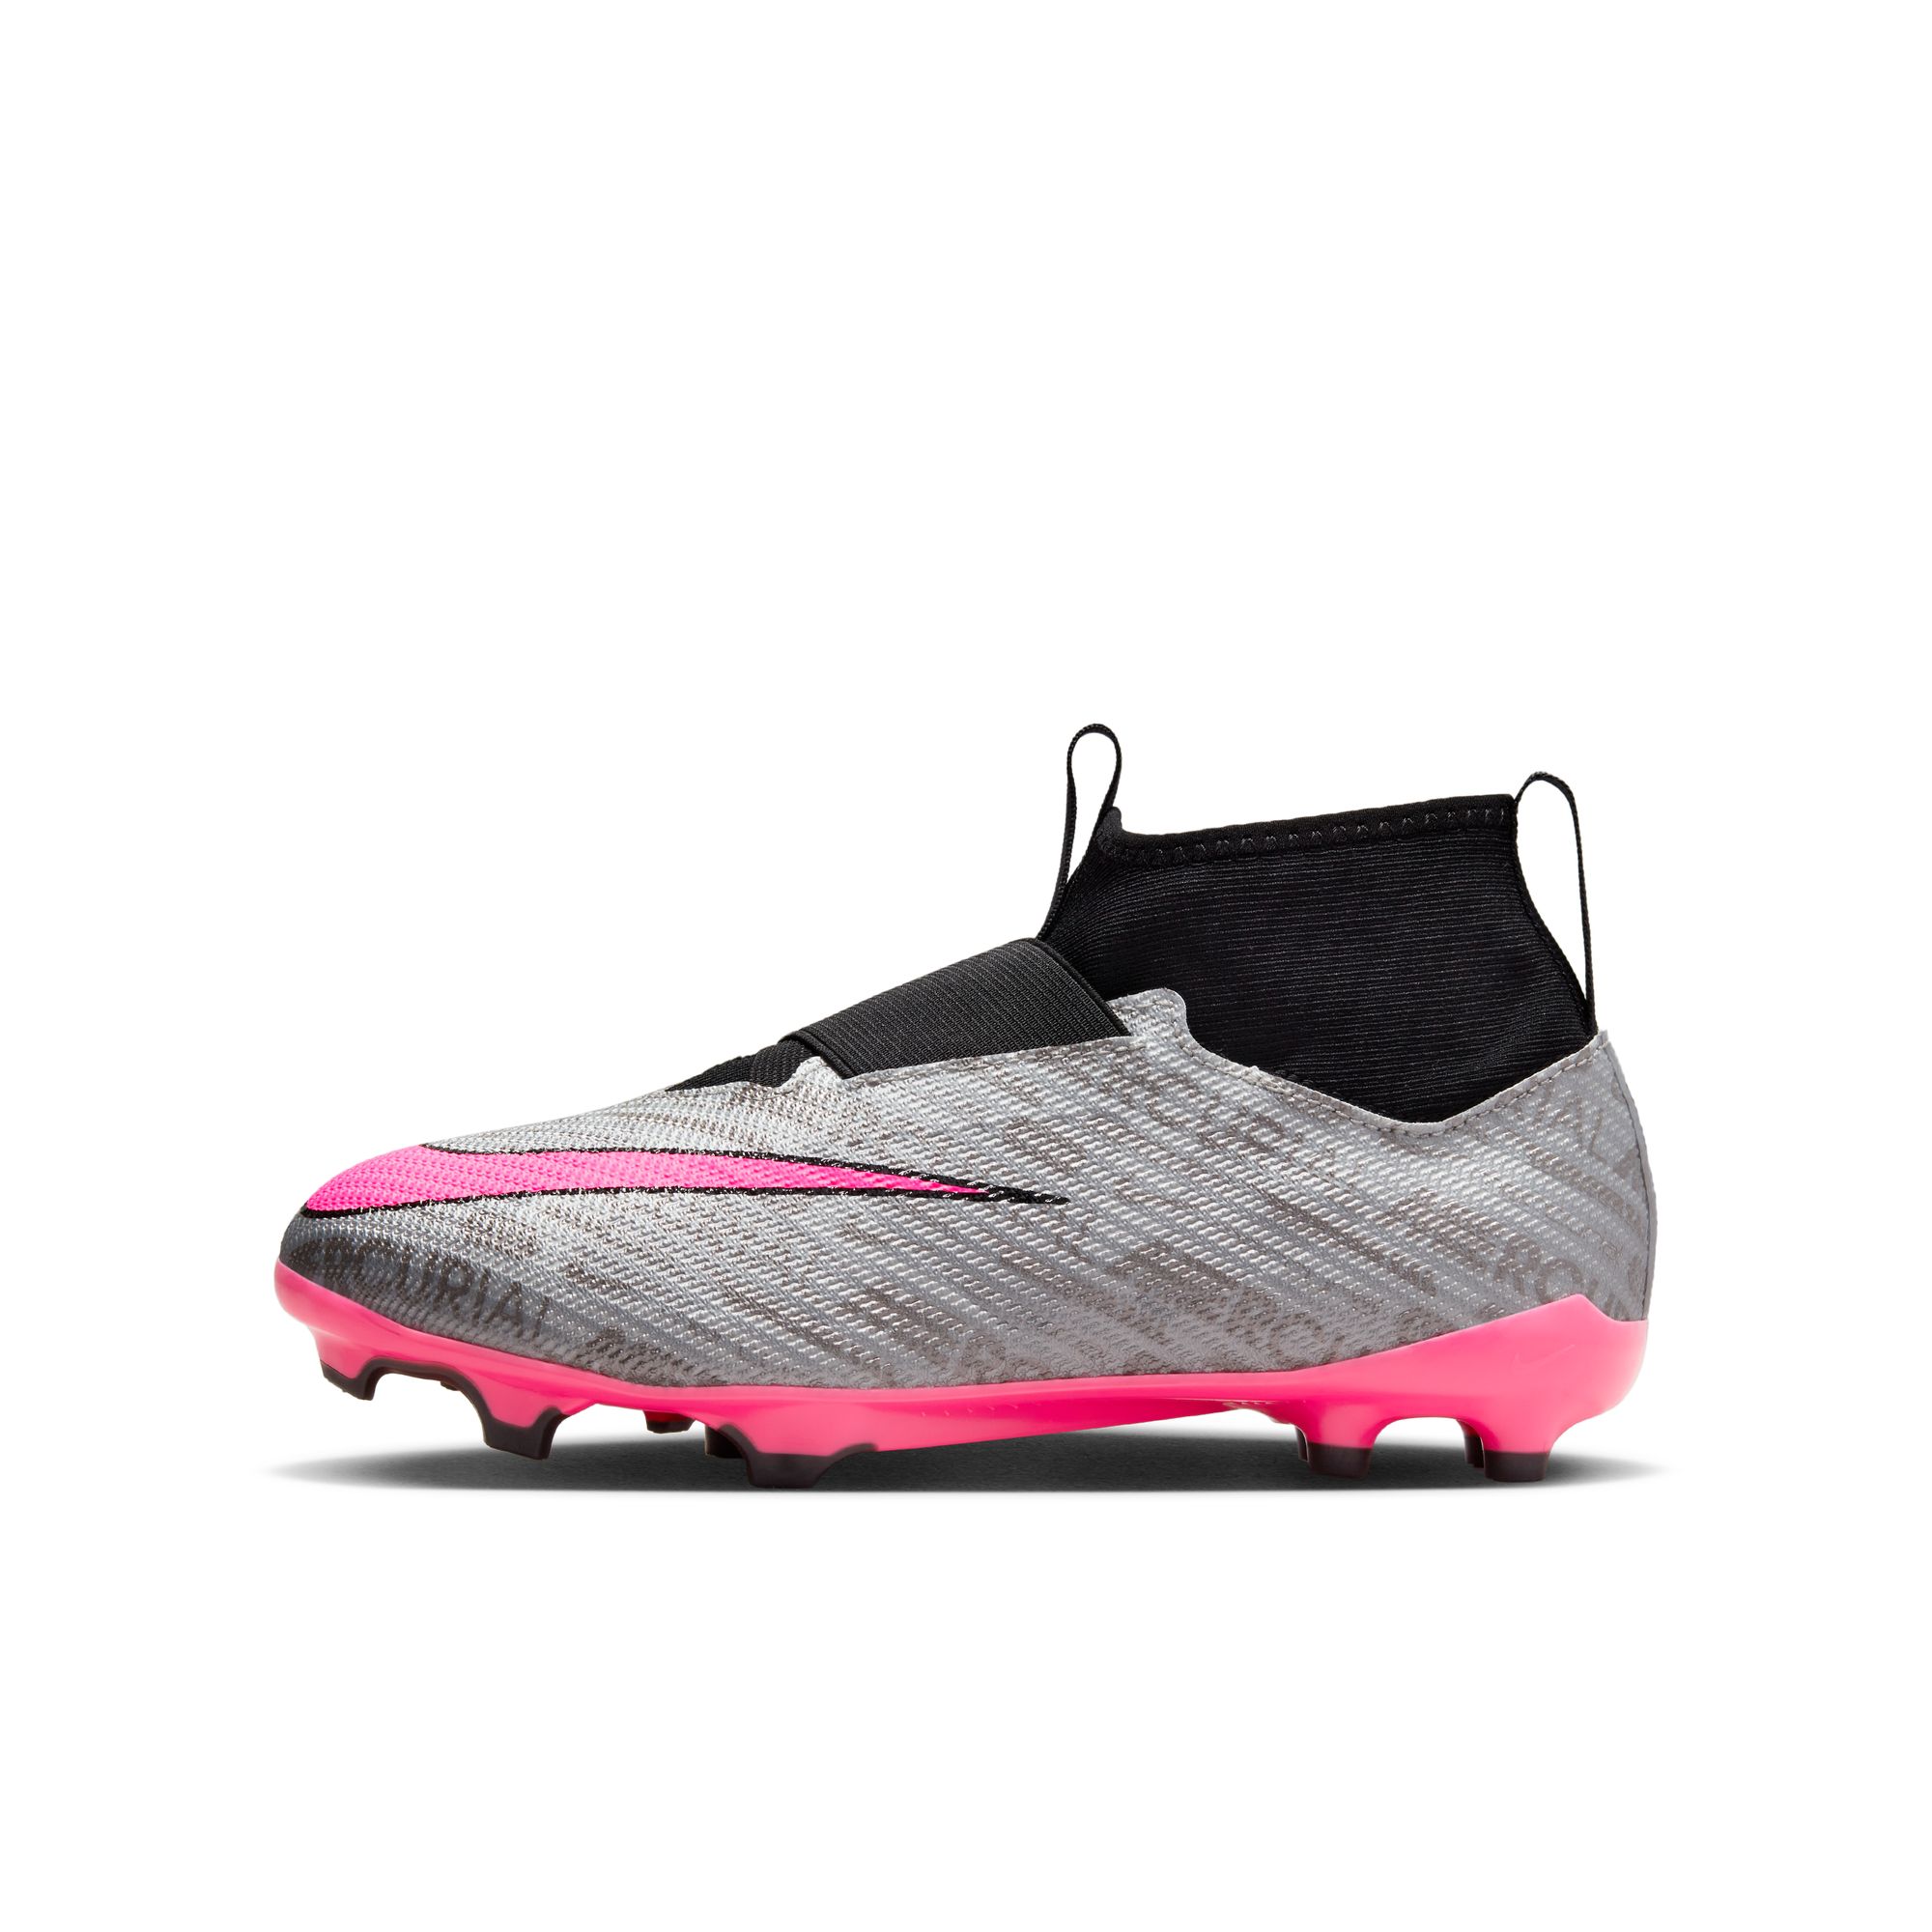 Nike Tiempo Legend 9 Elite FG Firm Ground Soccer Cleat -  White/Black/Blue/Pink